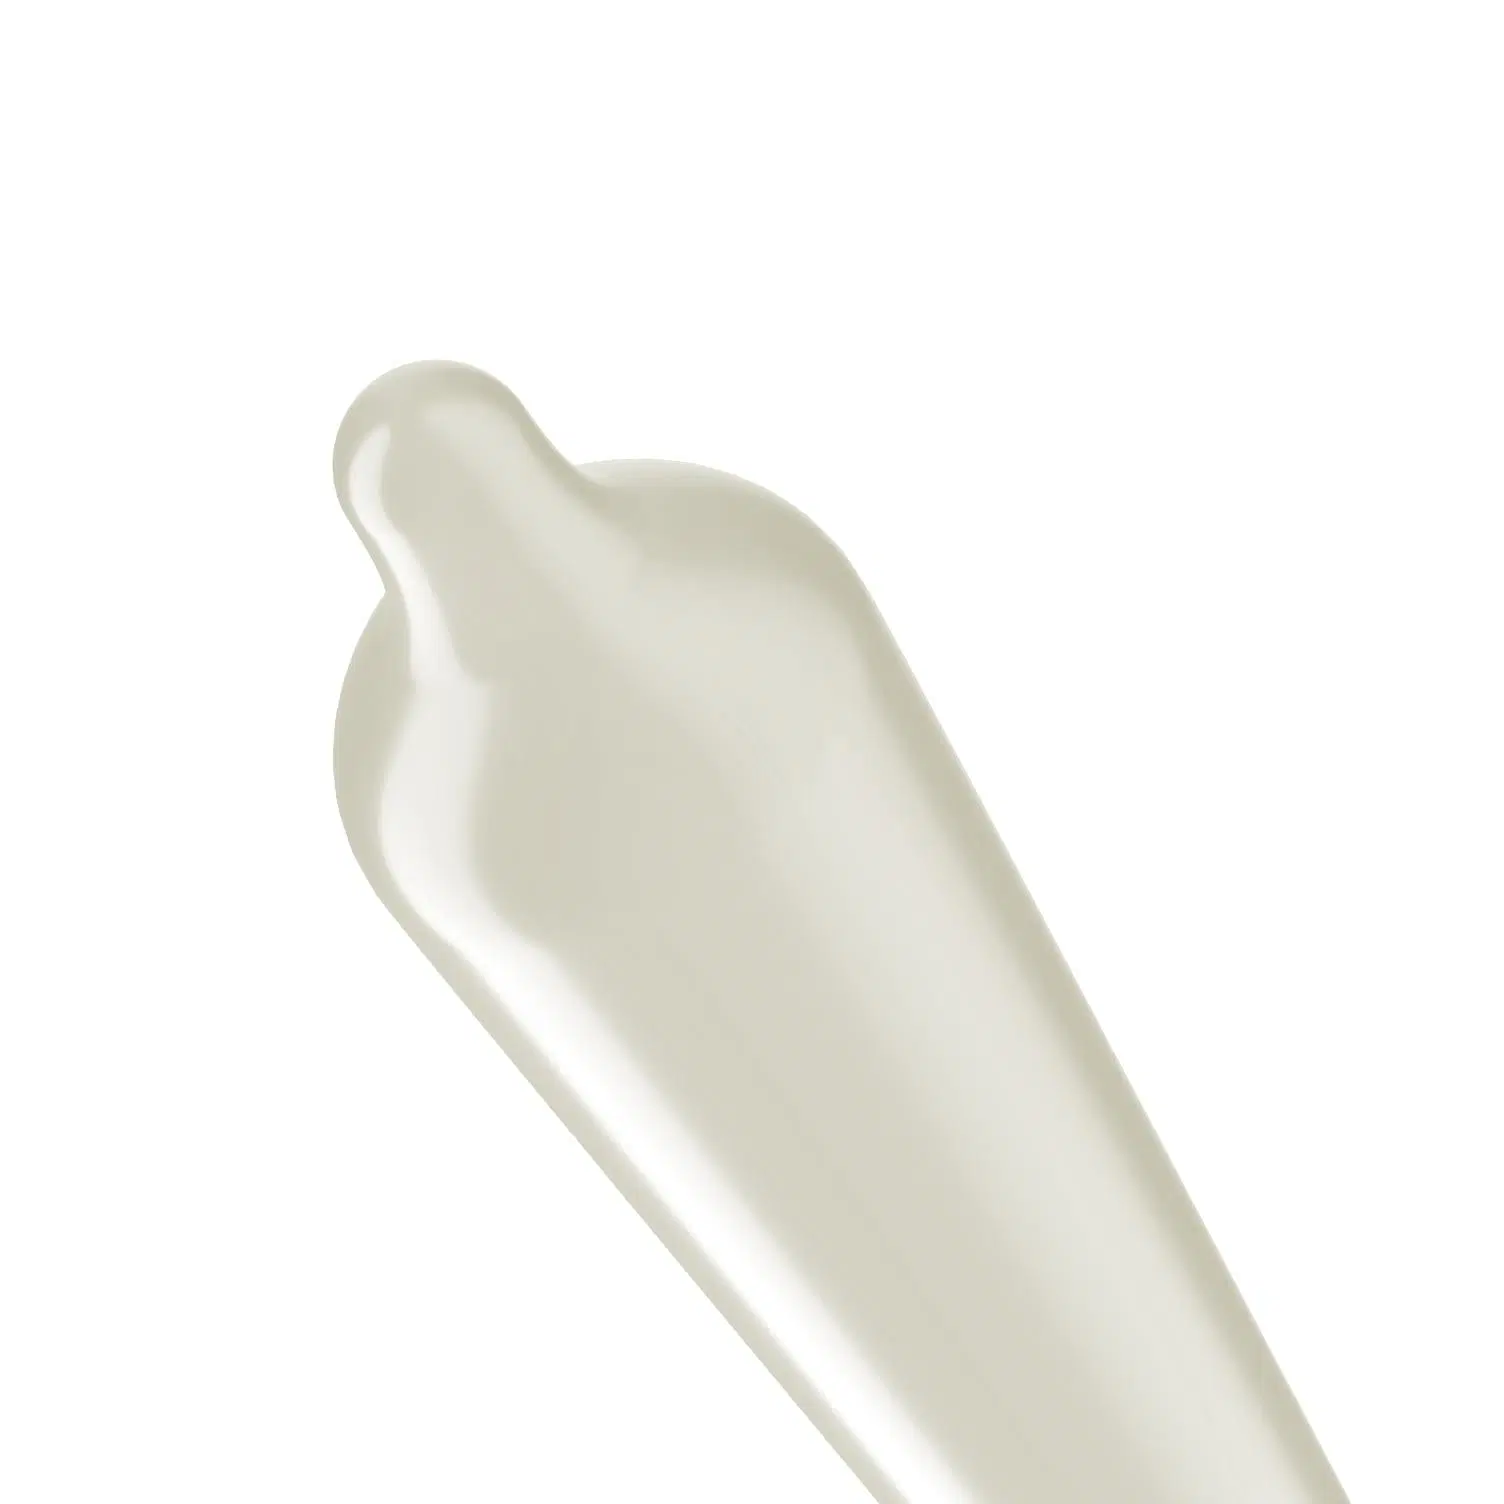 Magnum Large Ribbed and Lubricated Condoms with Premium Quality Latex 48CT Condom